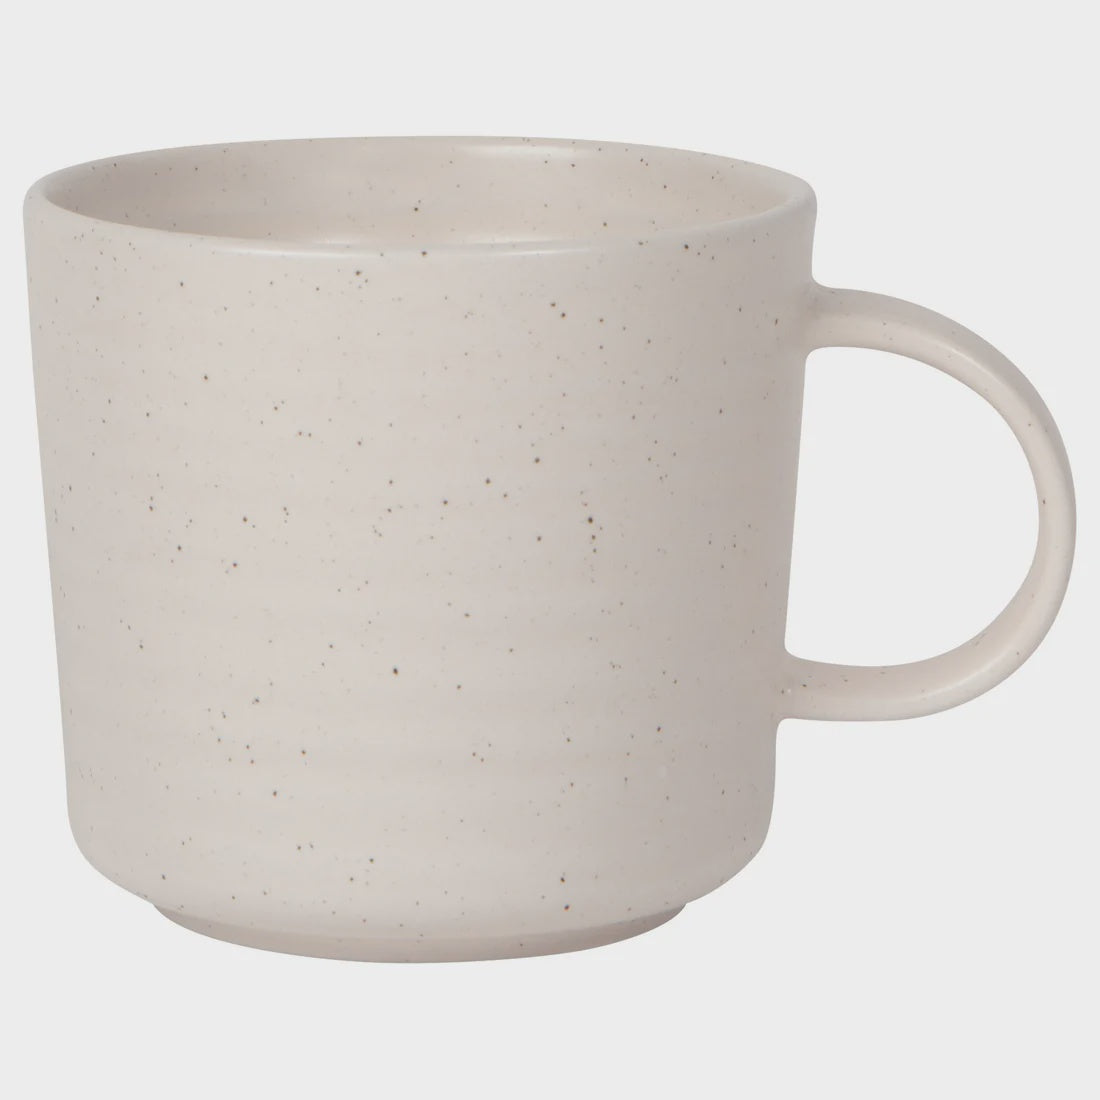 Terrain Mug, Sandstone